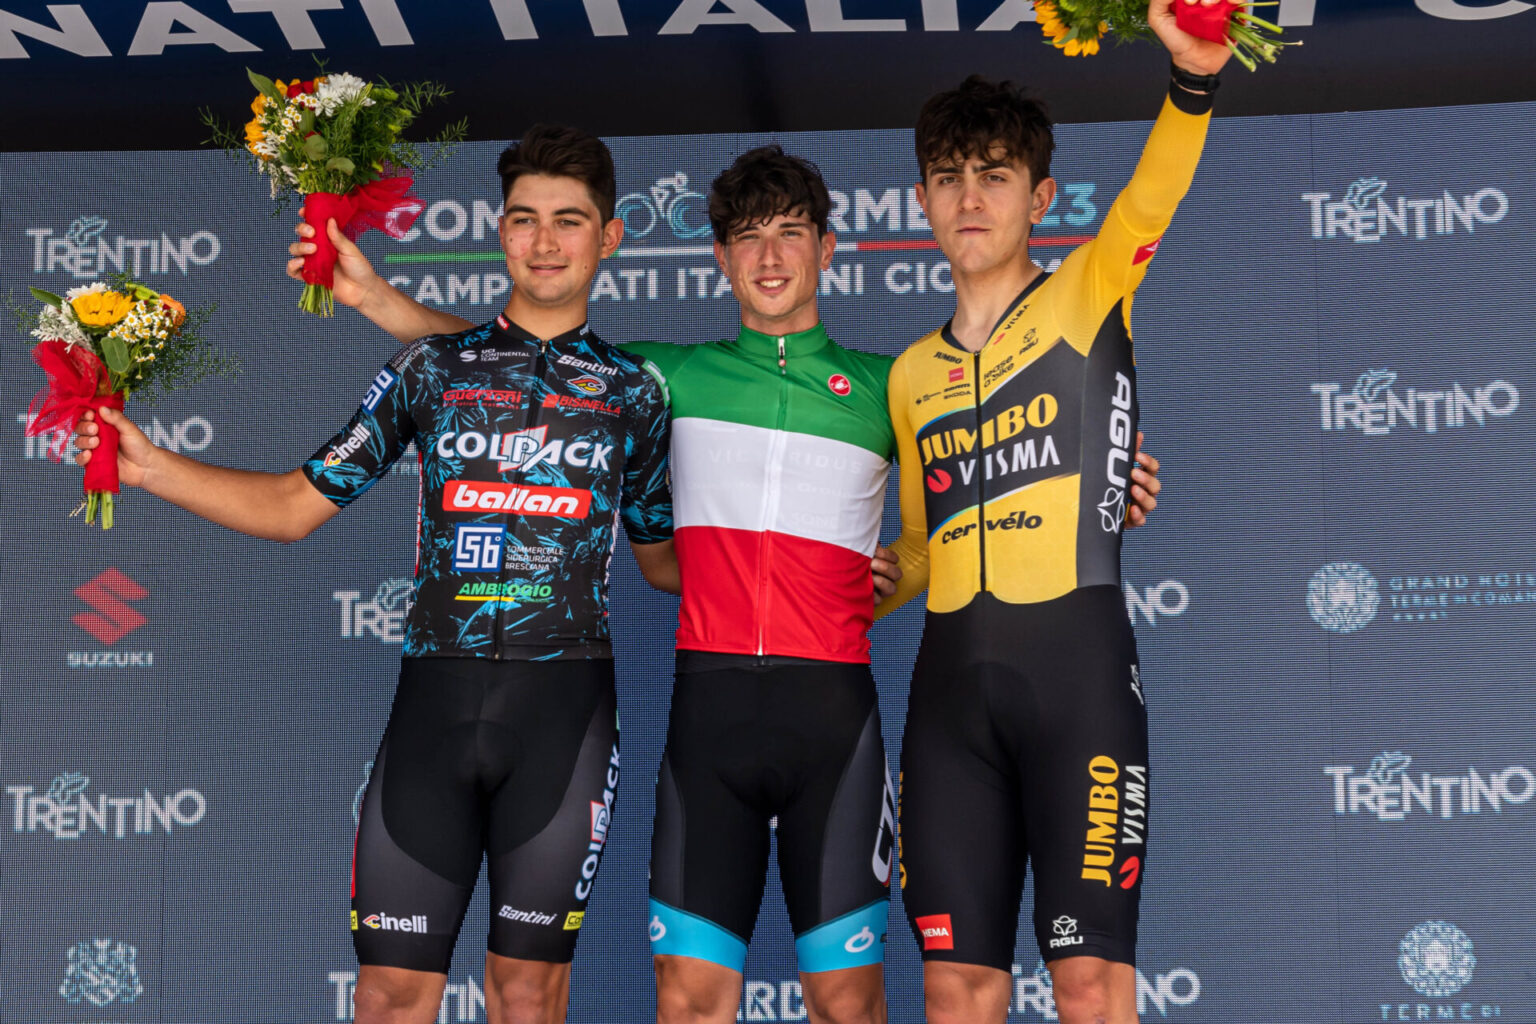 Cycling Team Friuli Victorious, trionfo di Olivo ai Campionati italiani a cronometro